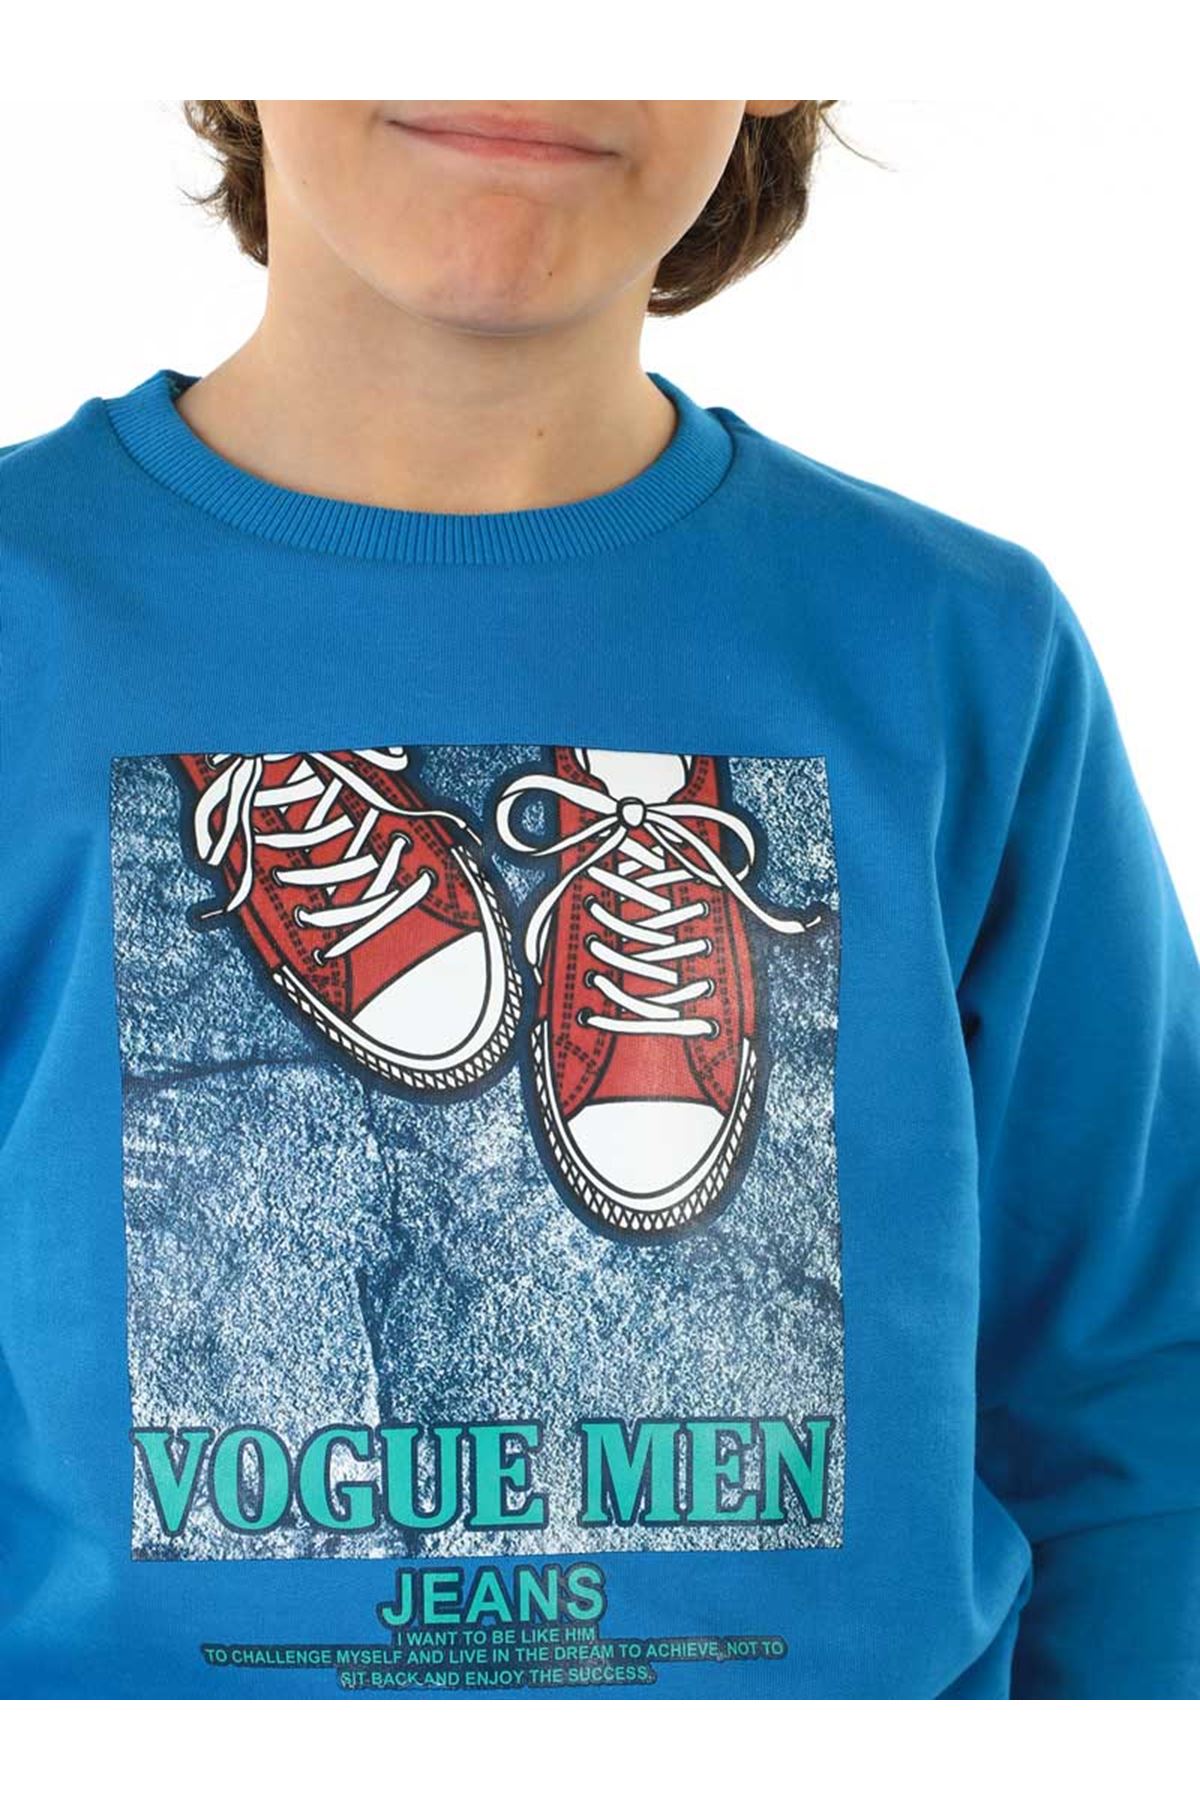 Blue Seasonal Male Child Sweatshirt